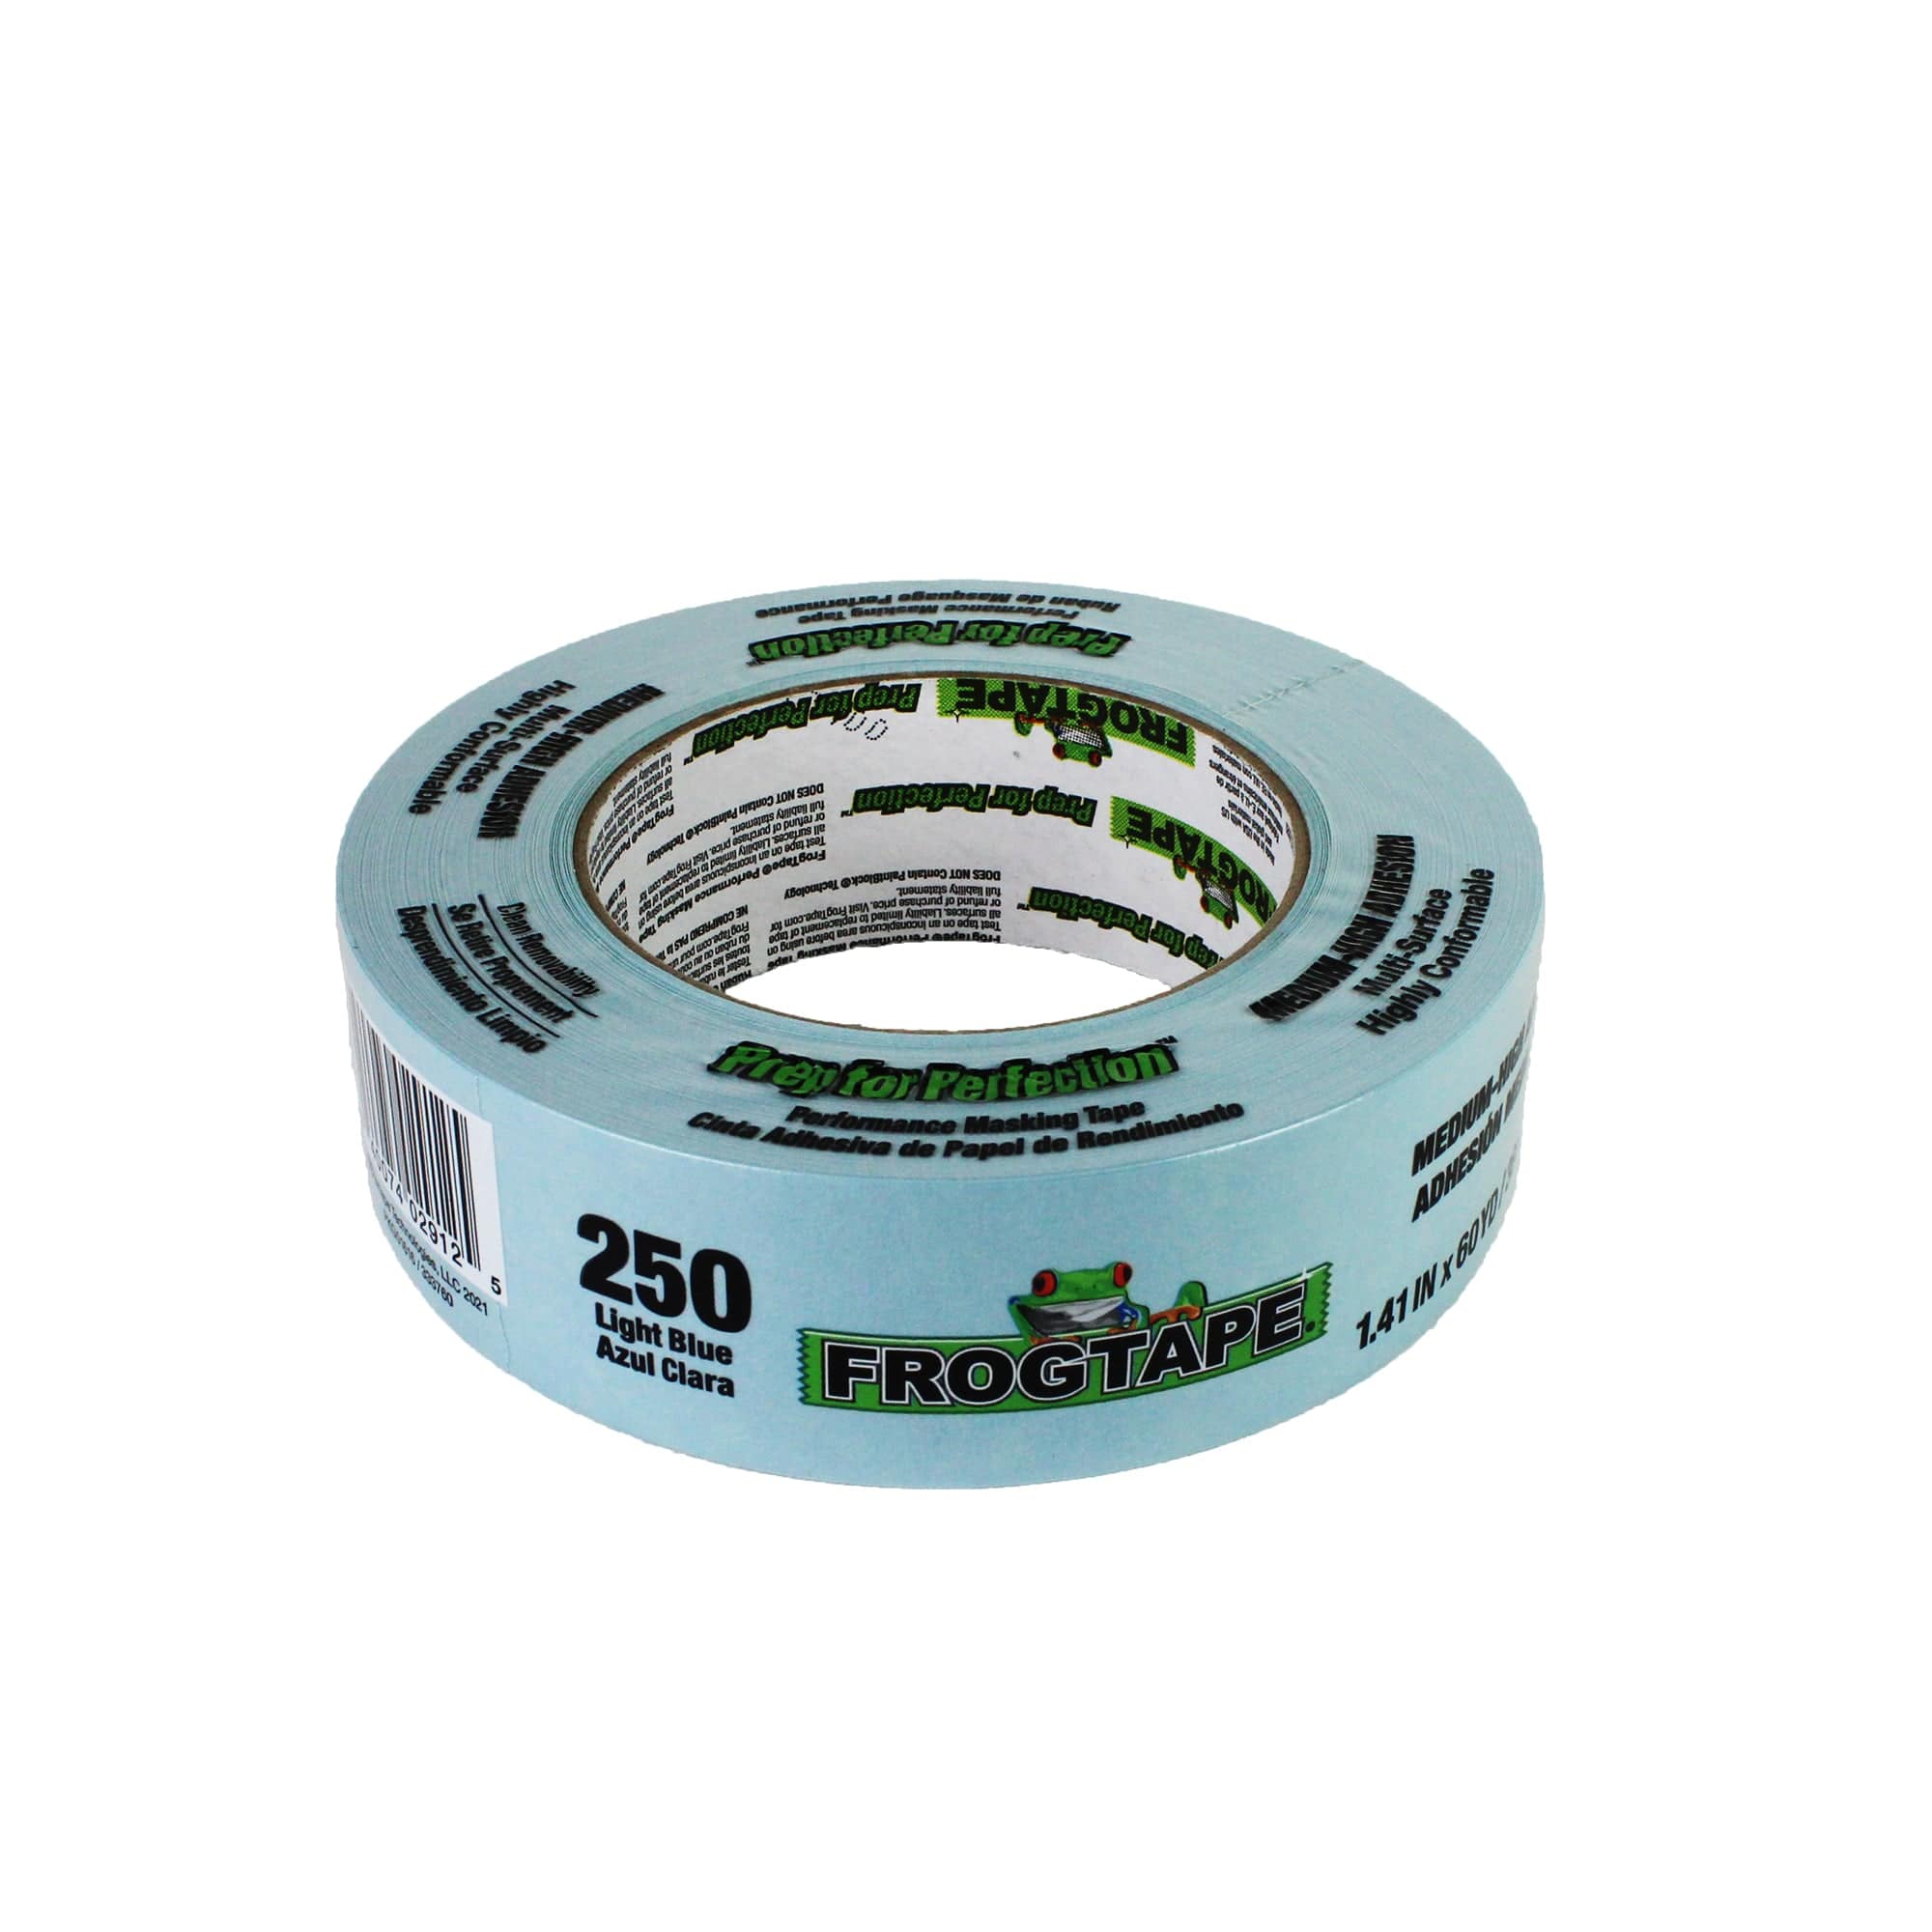 Shurtape 105379 FrogTape CP 250 36mmx55m Performance Grade Masking Tape, Medium-High Adhesion, Moderate Temperature - Light Blue